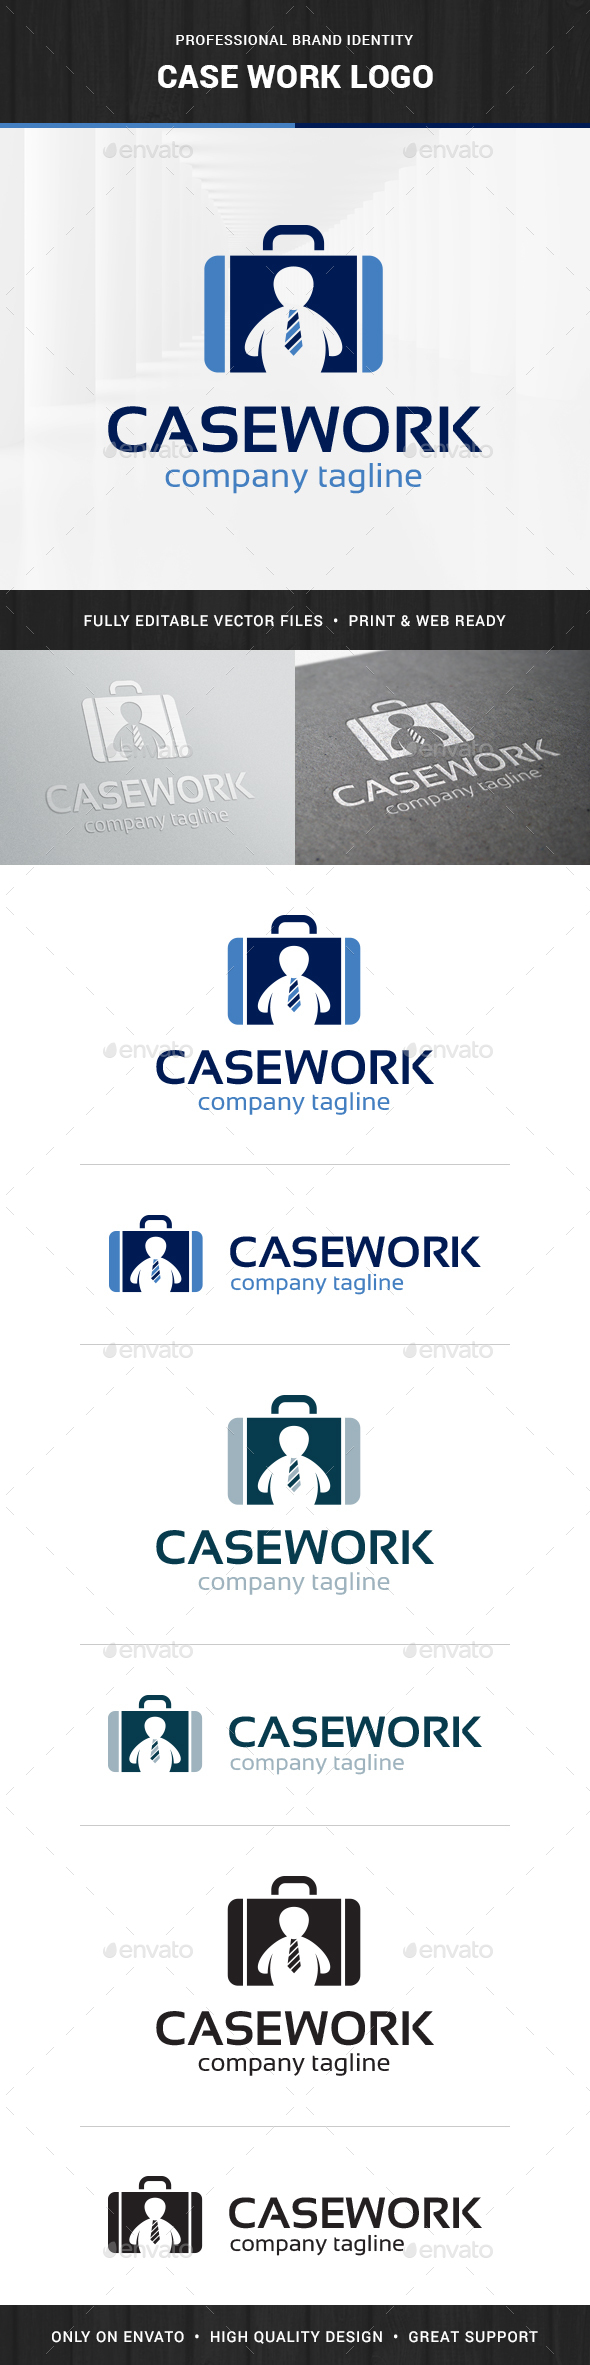 Case Work Logo Template